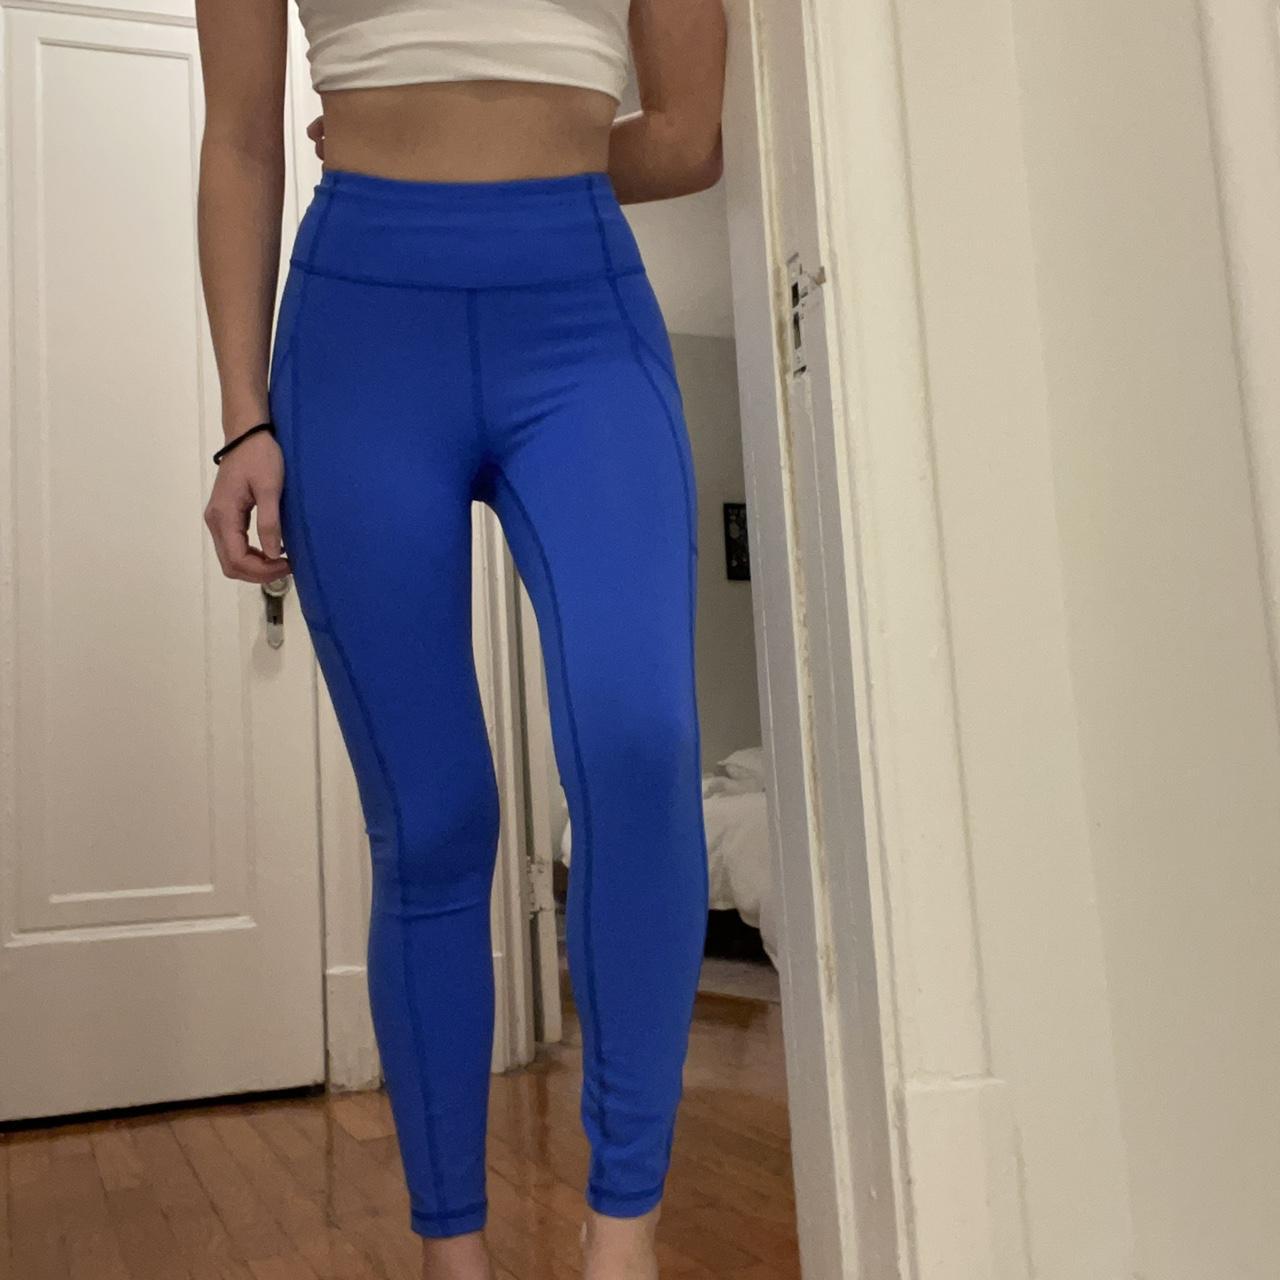 Lululemon Invigorate High-Rise Tight leggings 25 in